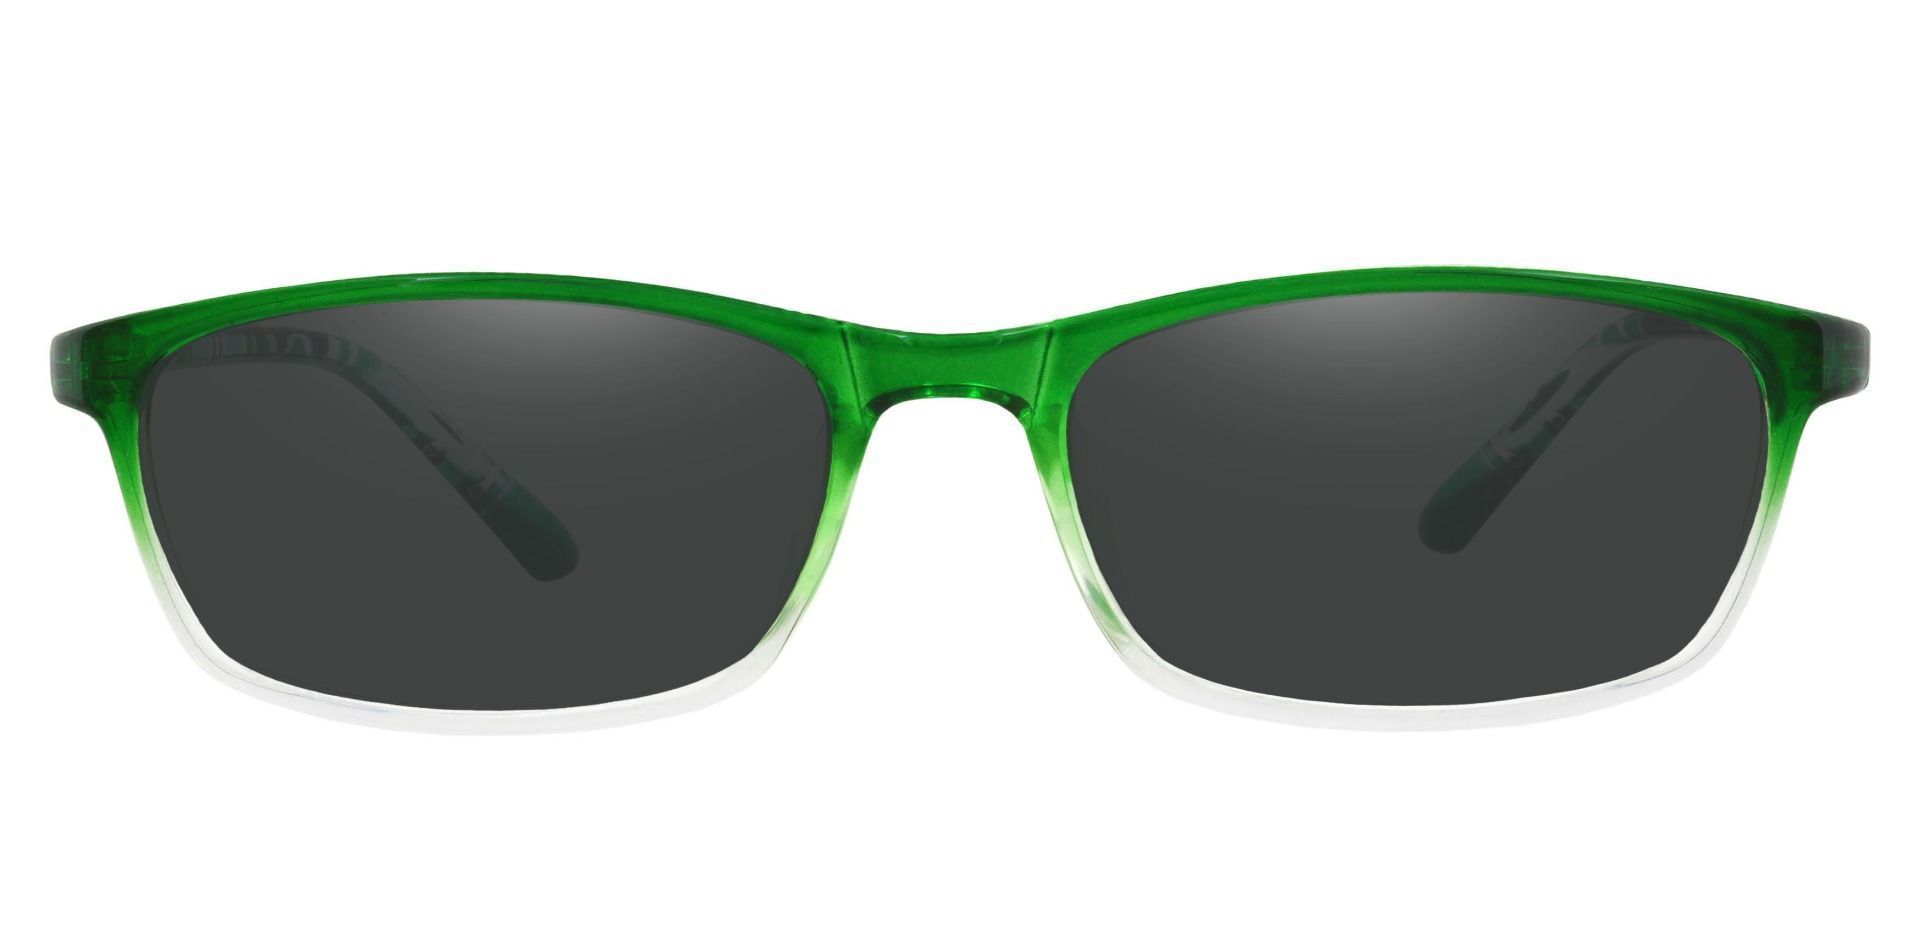 OPTOFENDY Polarized Clip on Sunglasses over Prescription Glasses UV400  Protection Anti Glare Blue Lenses Eyewear Outdoor for Women Men -  Walmart.com